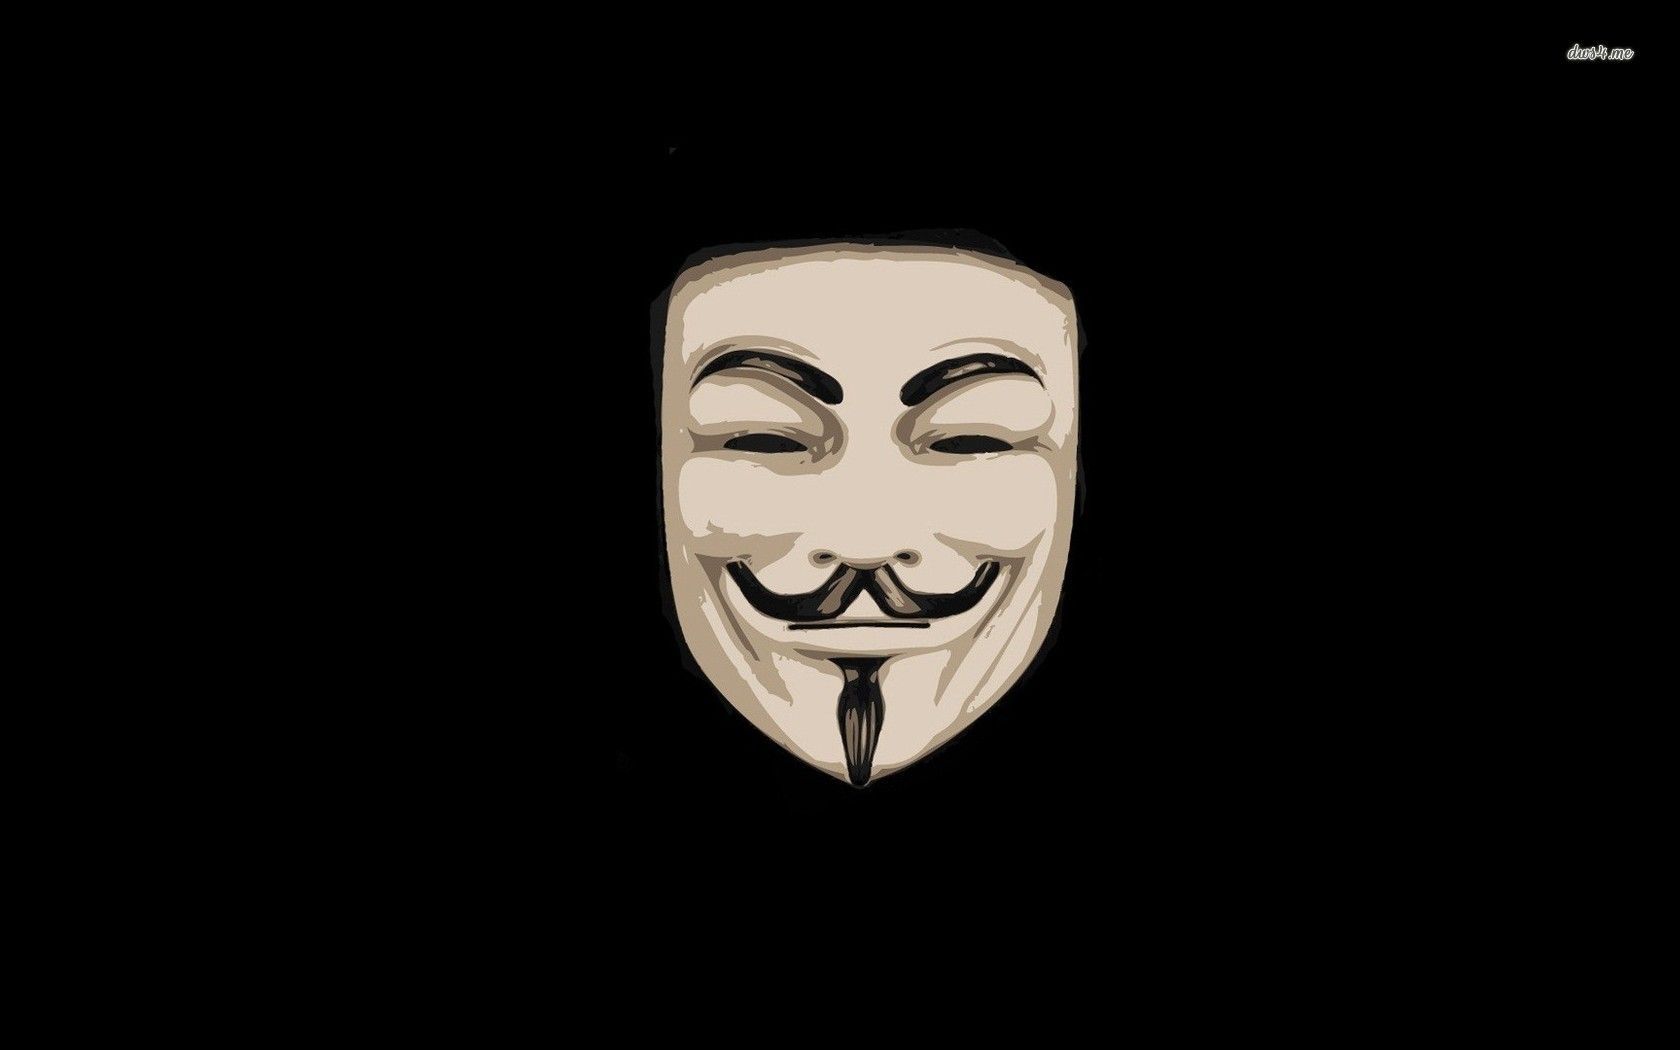 Anonymous mask wallpaper - Digital Art wallpapers - #9824